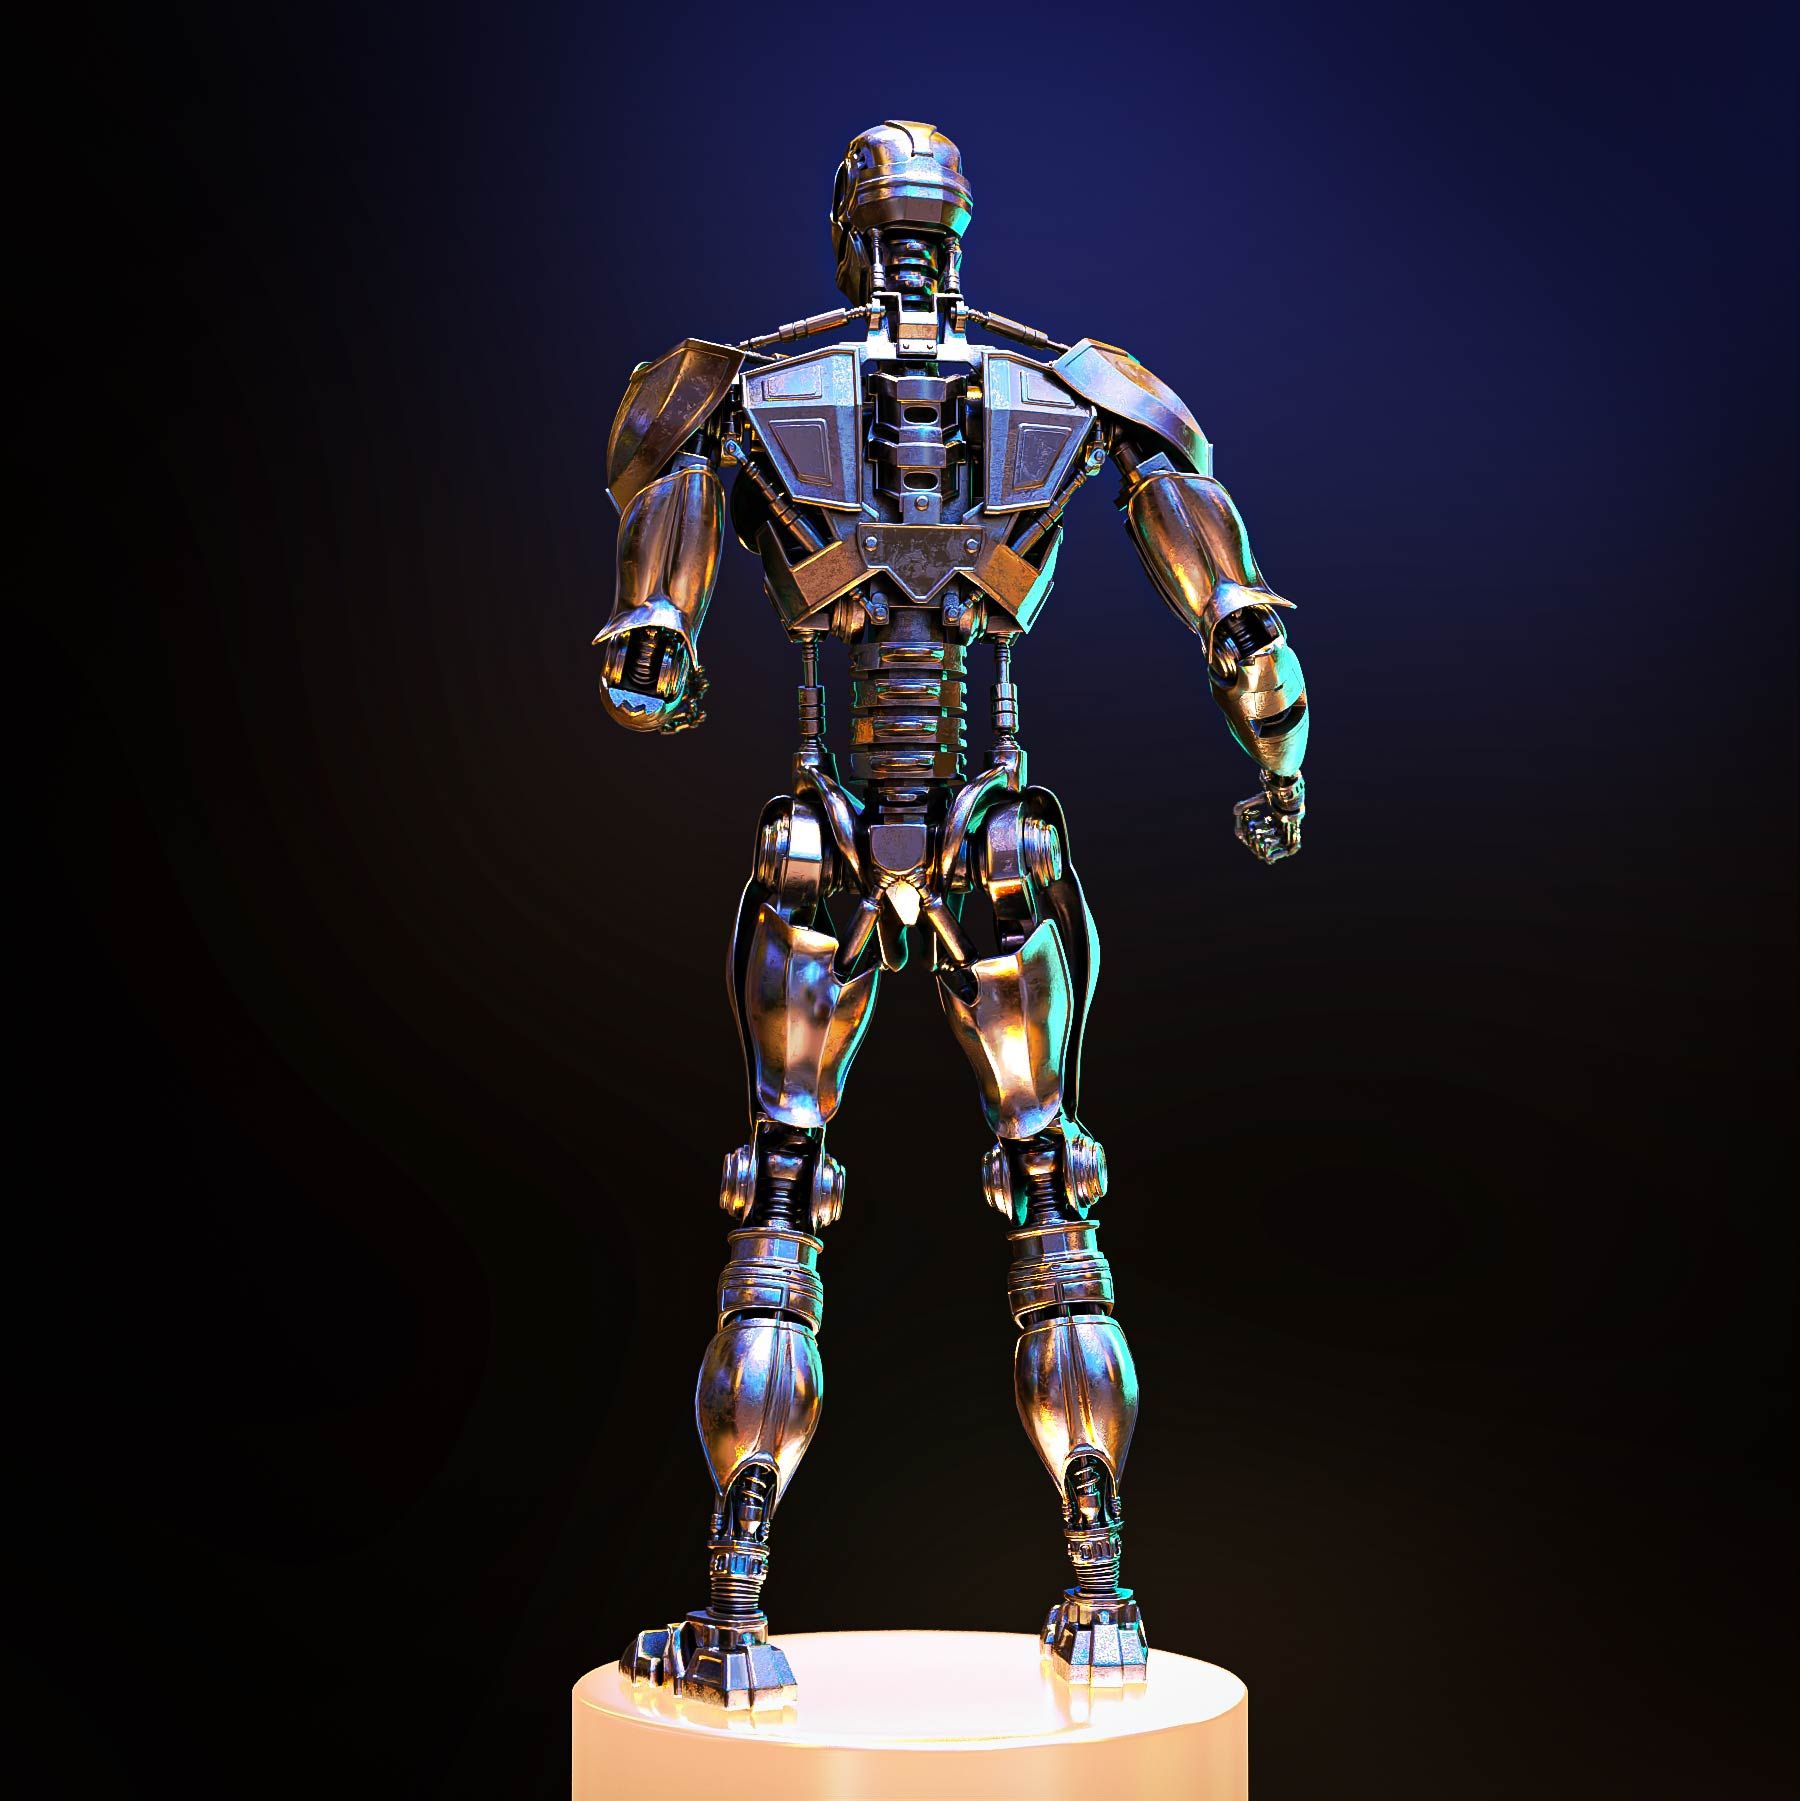 Rigged-Terminator-3D-Model--Futuristic-Cybernetic-Exoskeleton